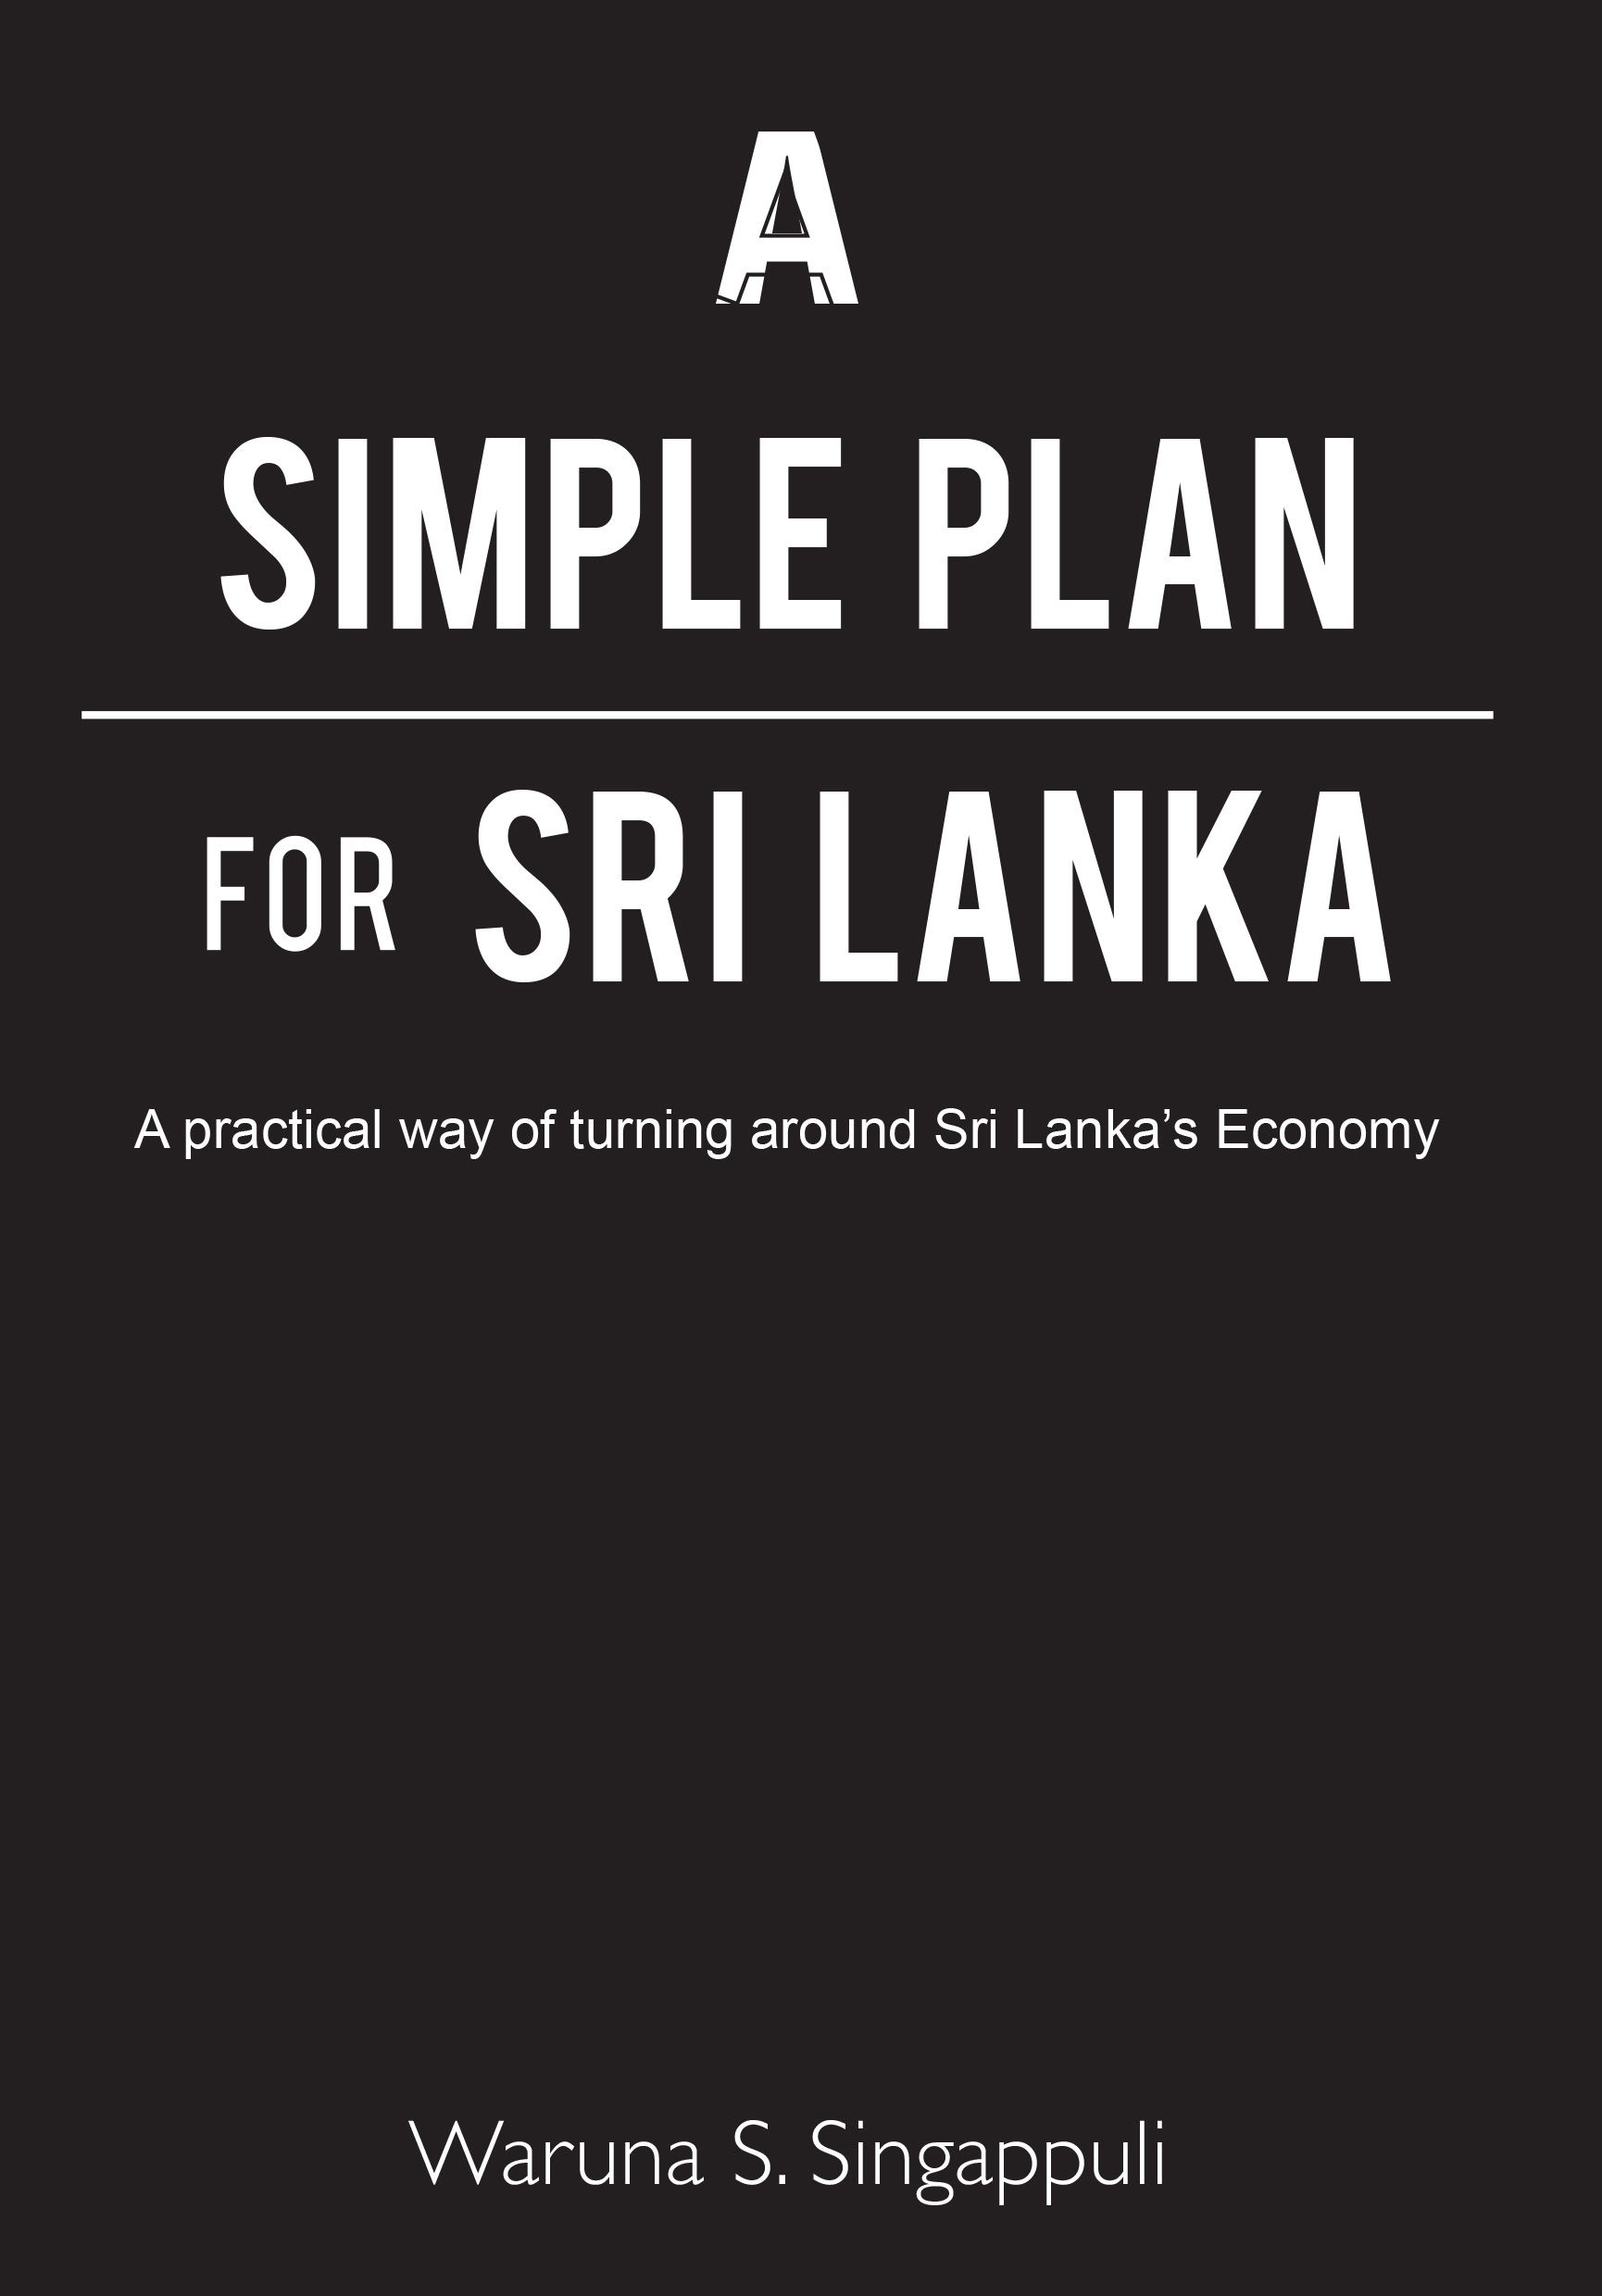 A Simple plan for Sri Lanka